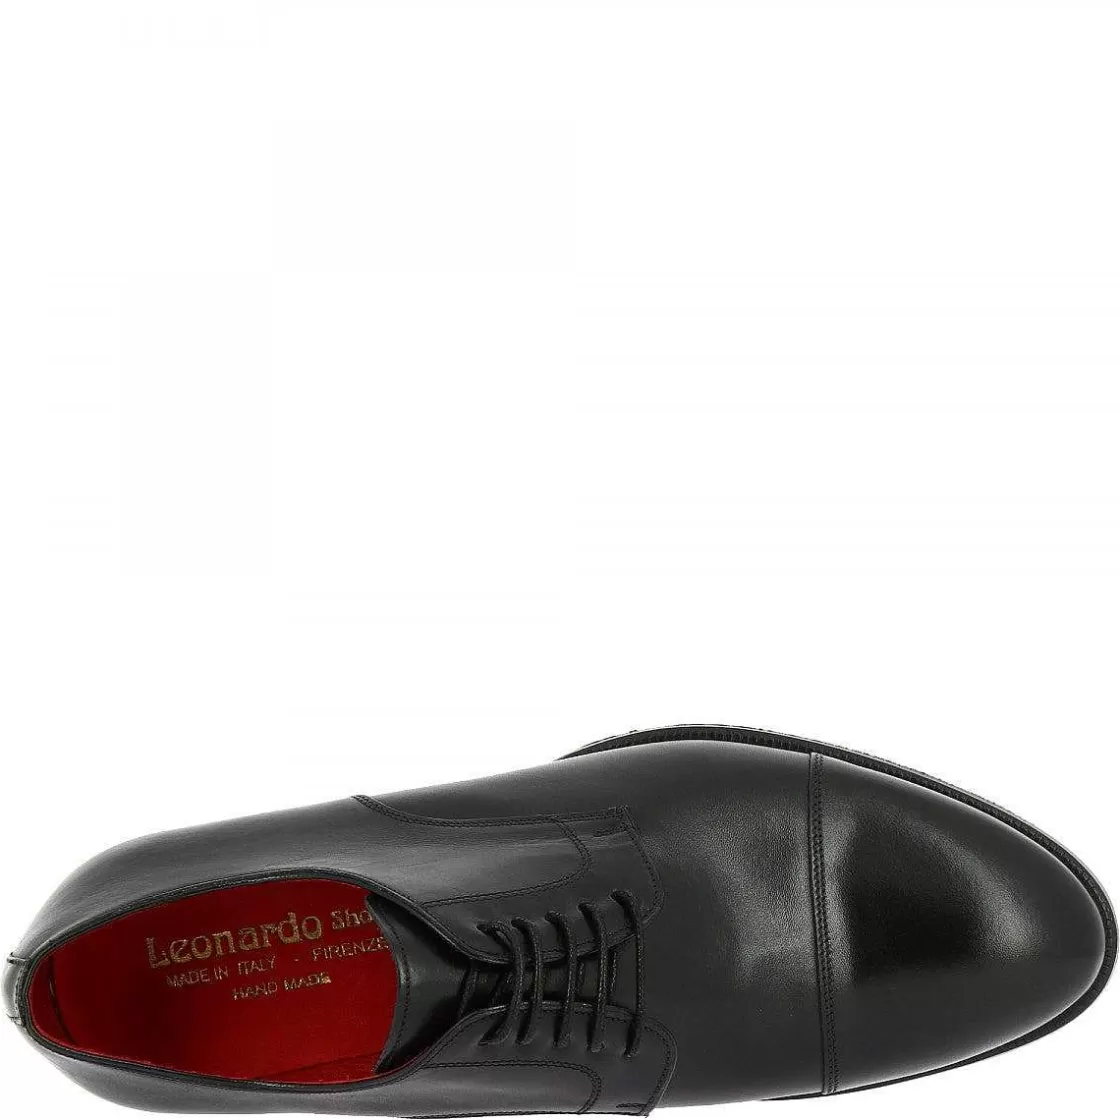 Leonardo Men'S Elegant Oxford Shoes Handmade In Black Calf Leather Best Sale